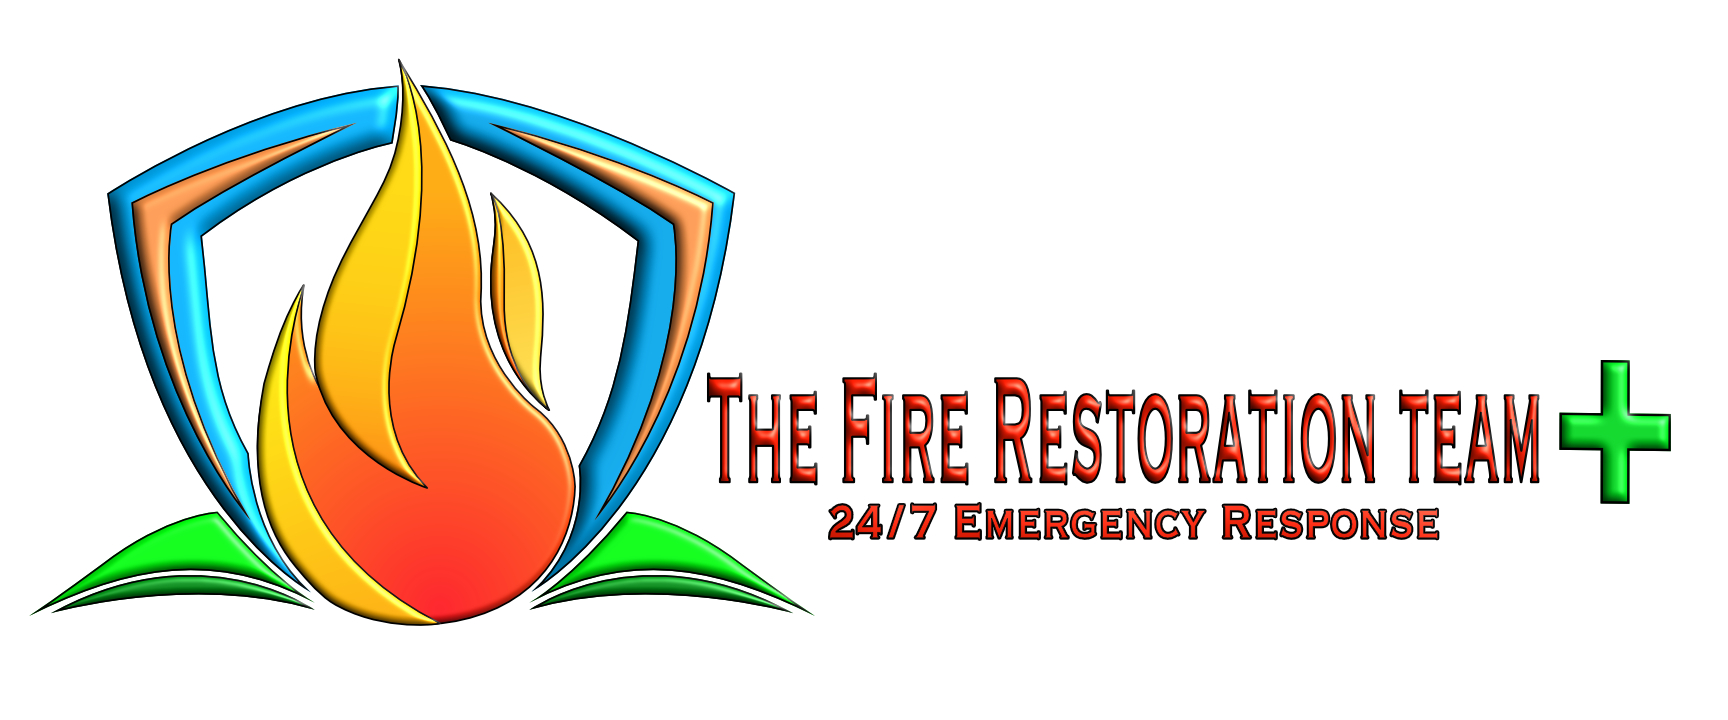 The Fire Restoration Team